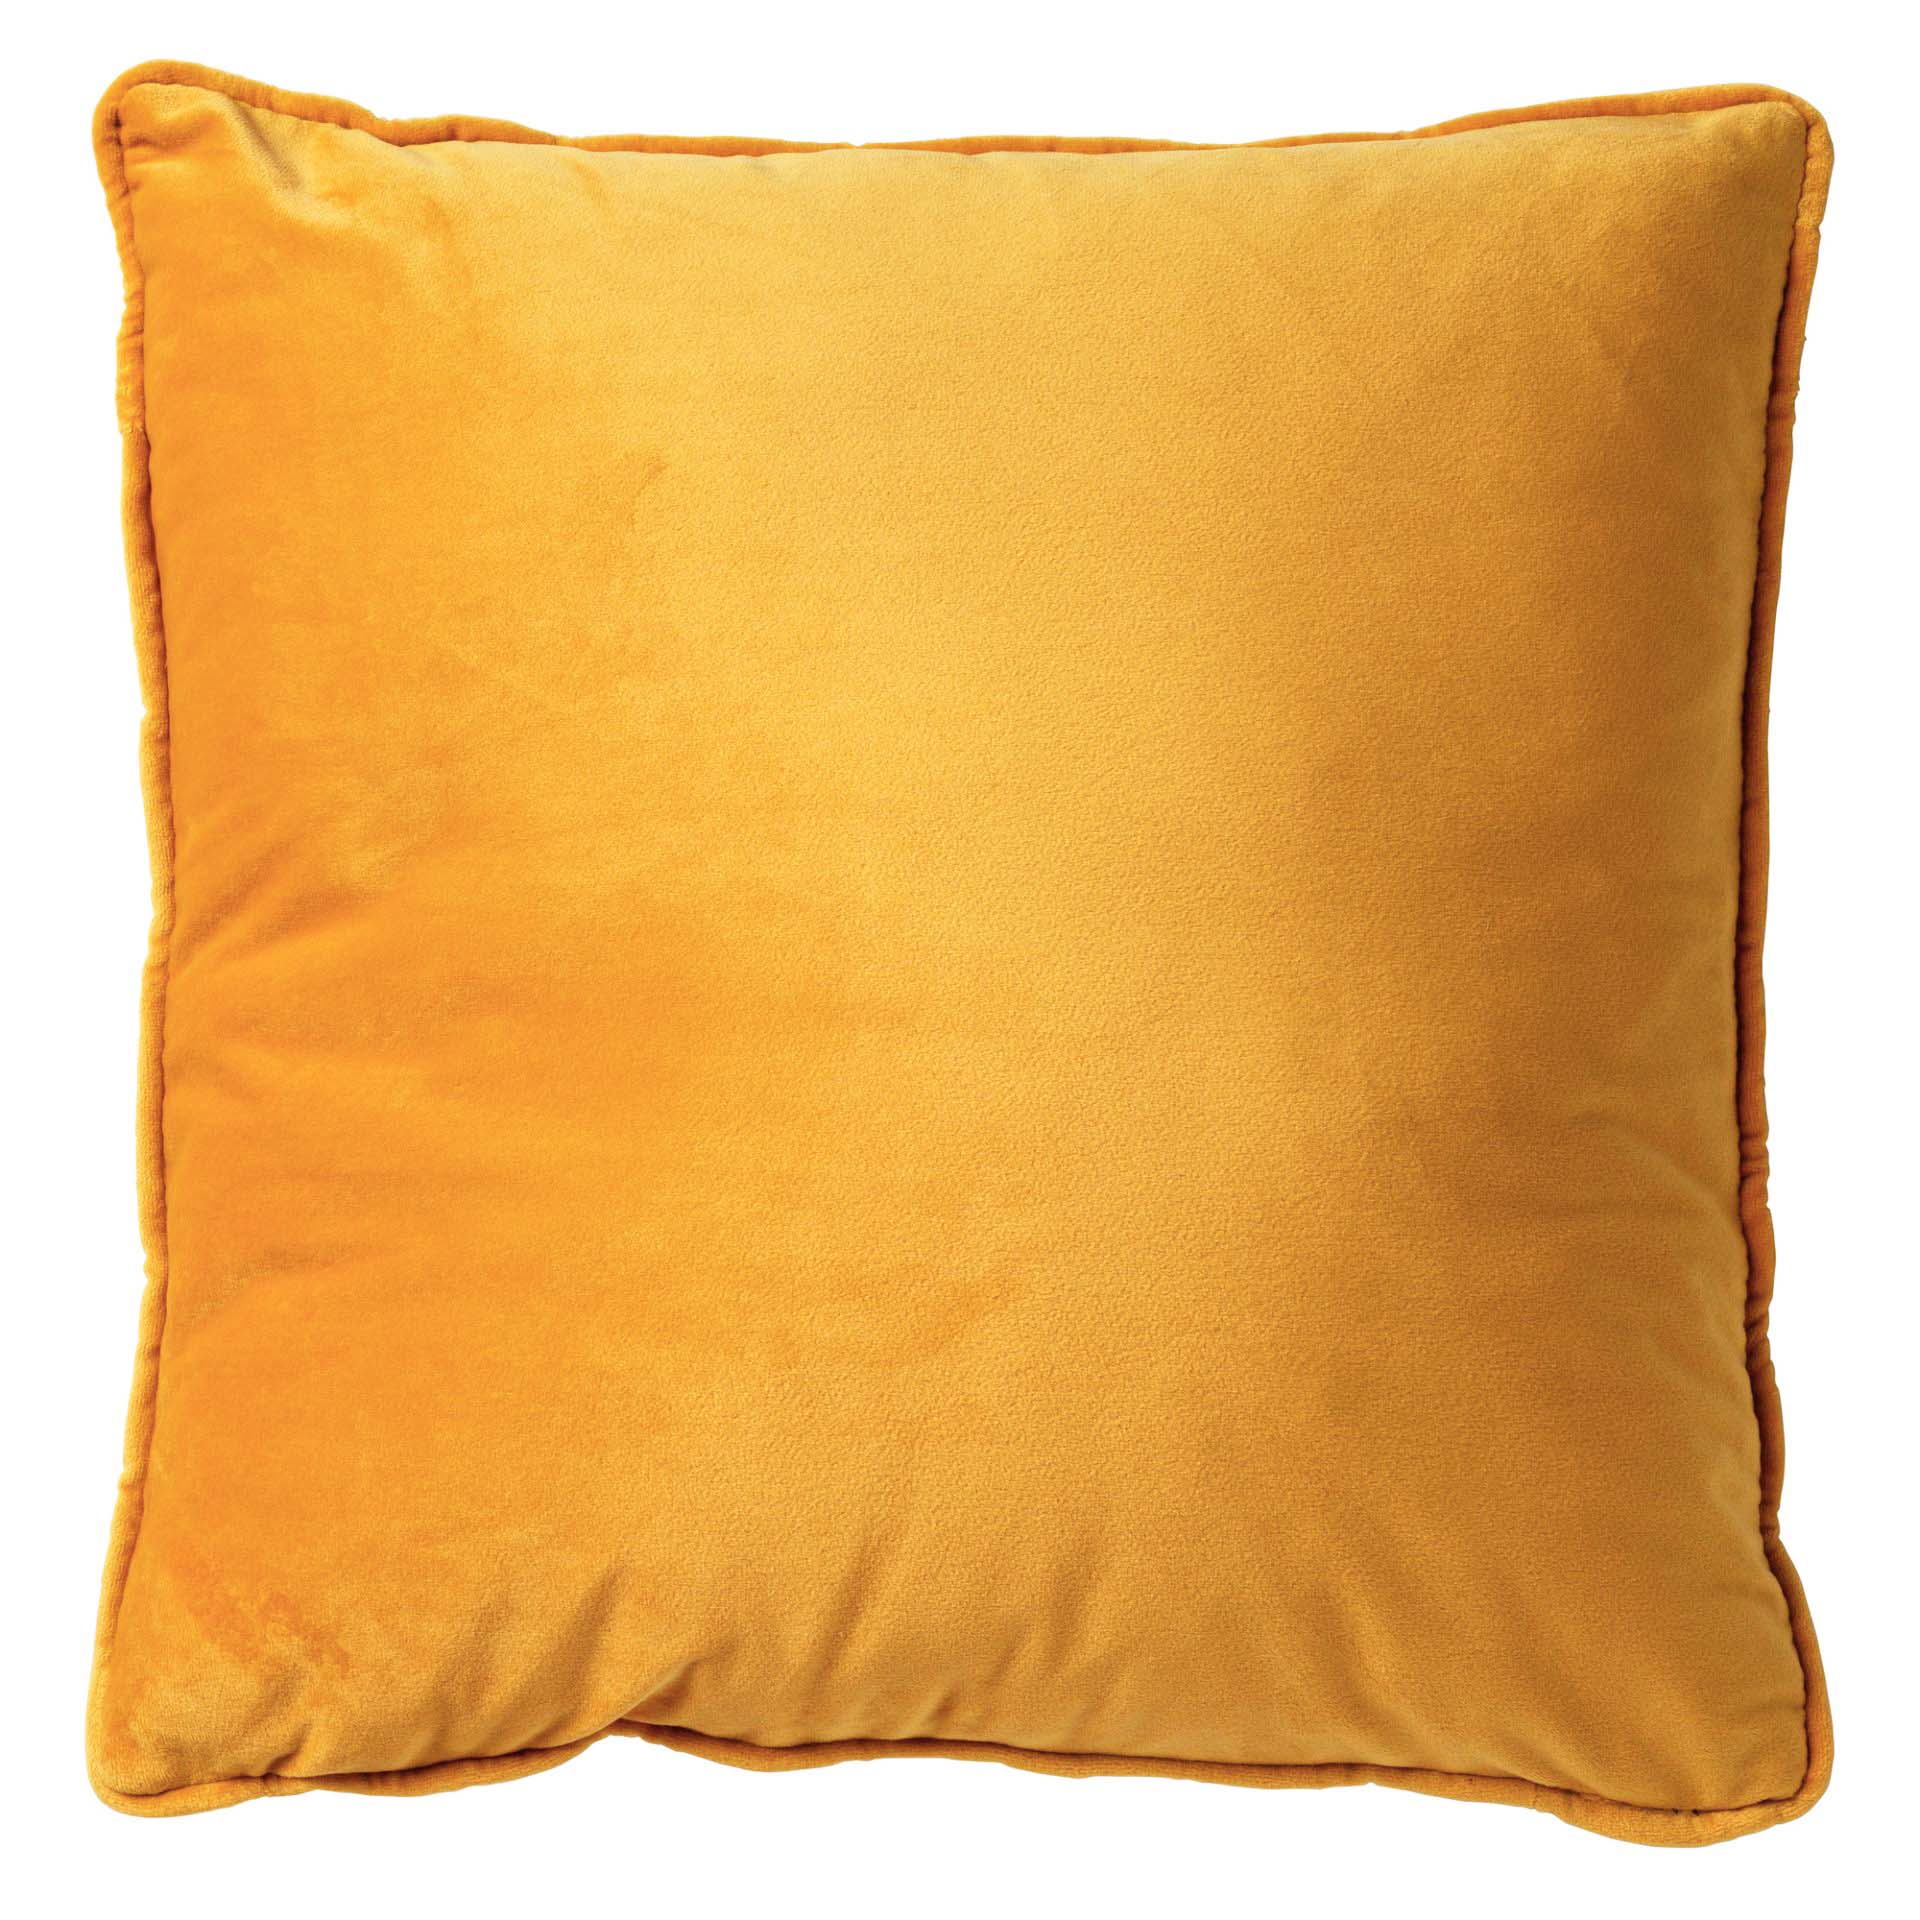 FINN - Kussenhoes velvet 45x45 cm - Golden Glow - geel